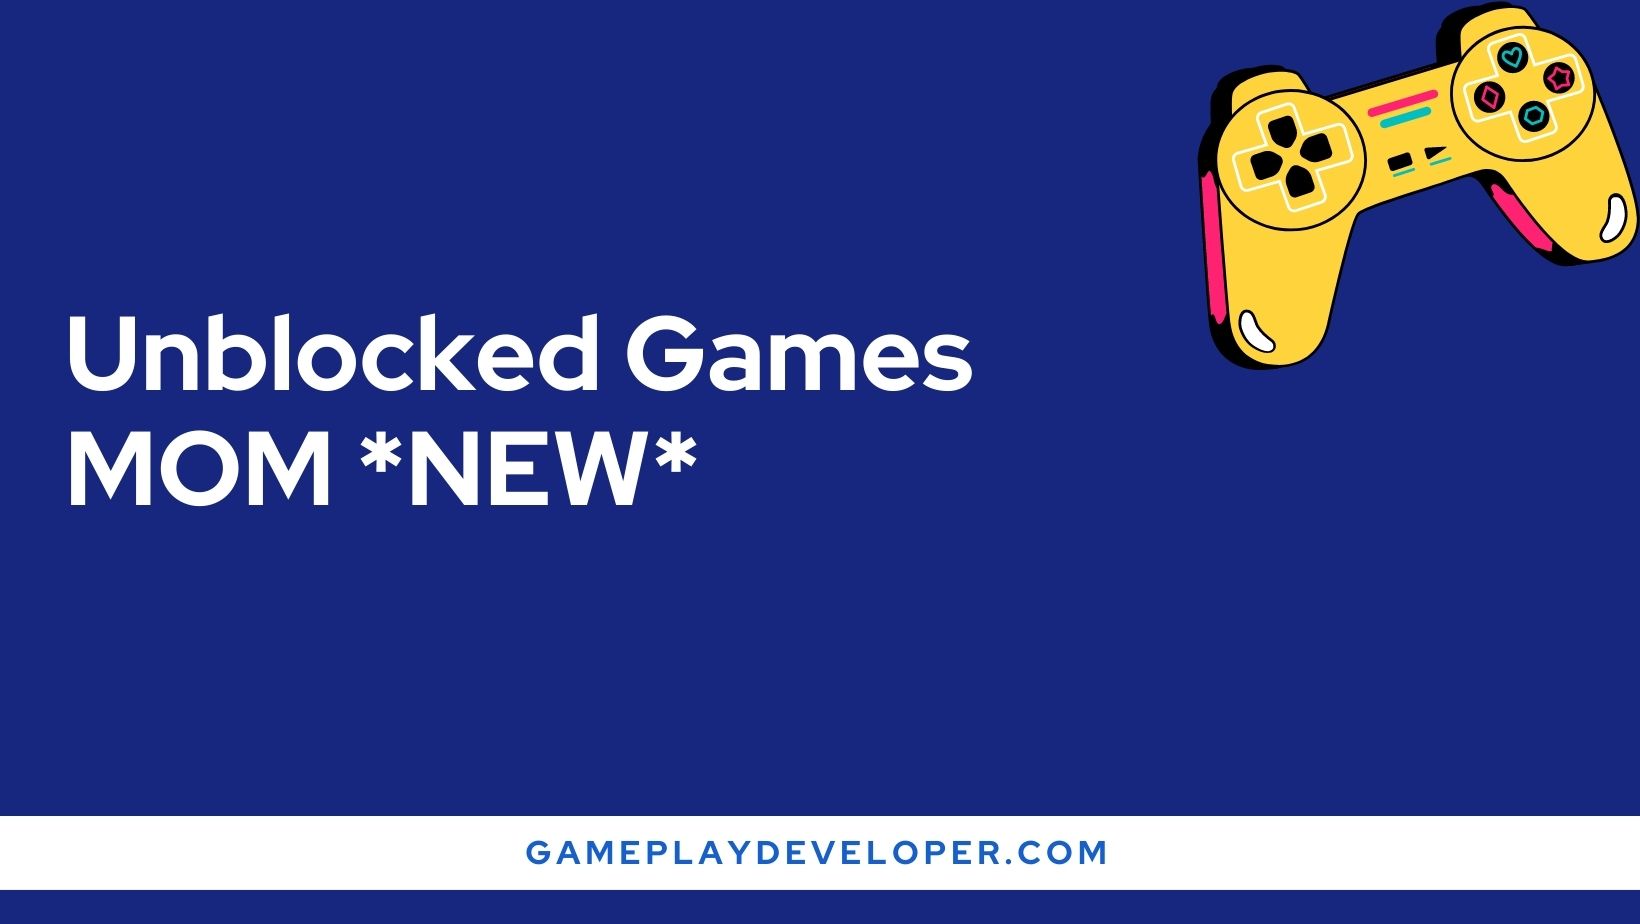 Unblocked Games MOM NEW Gameplay Developer